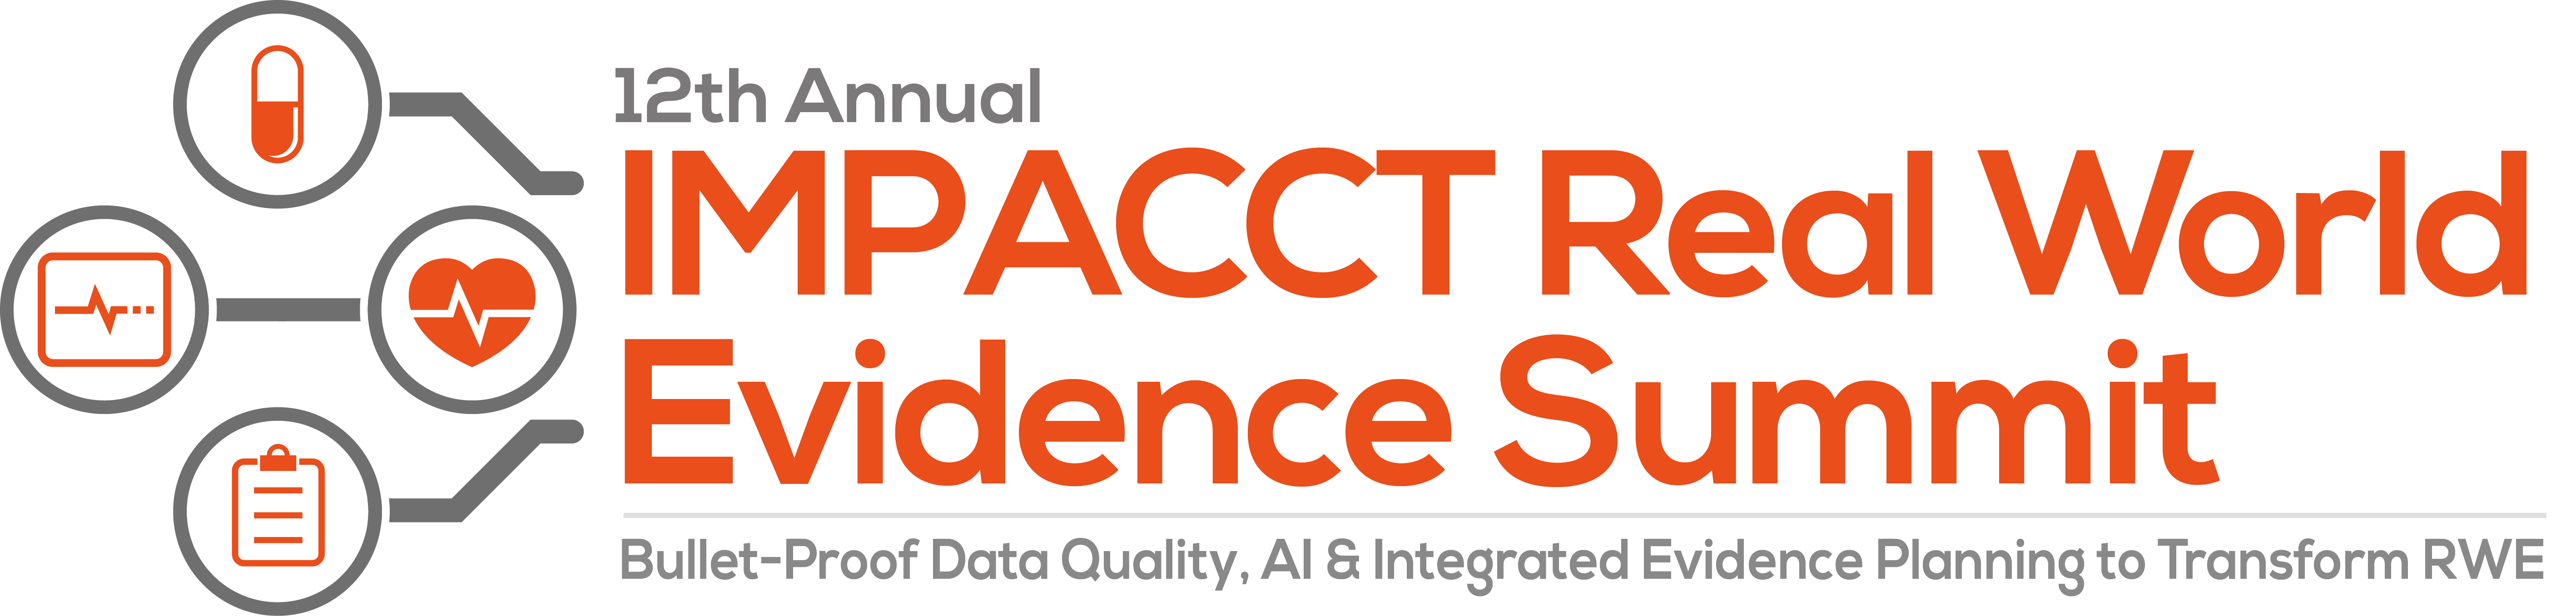 12th-IMPACCT-Real-World-Evidence-Summit-logo